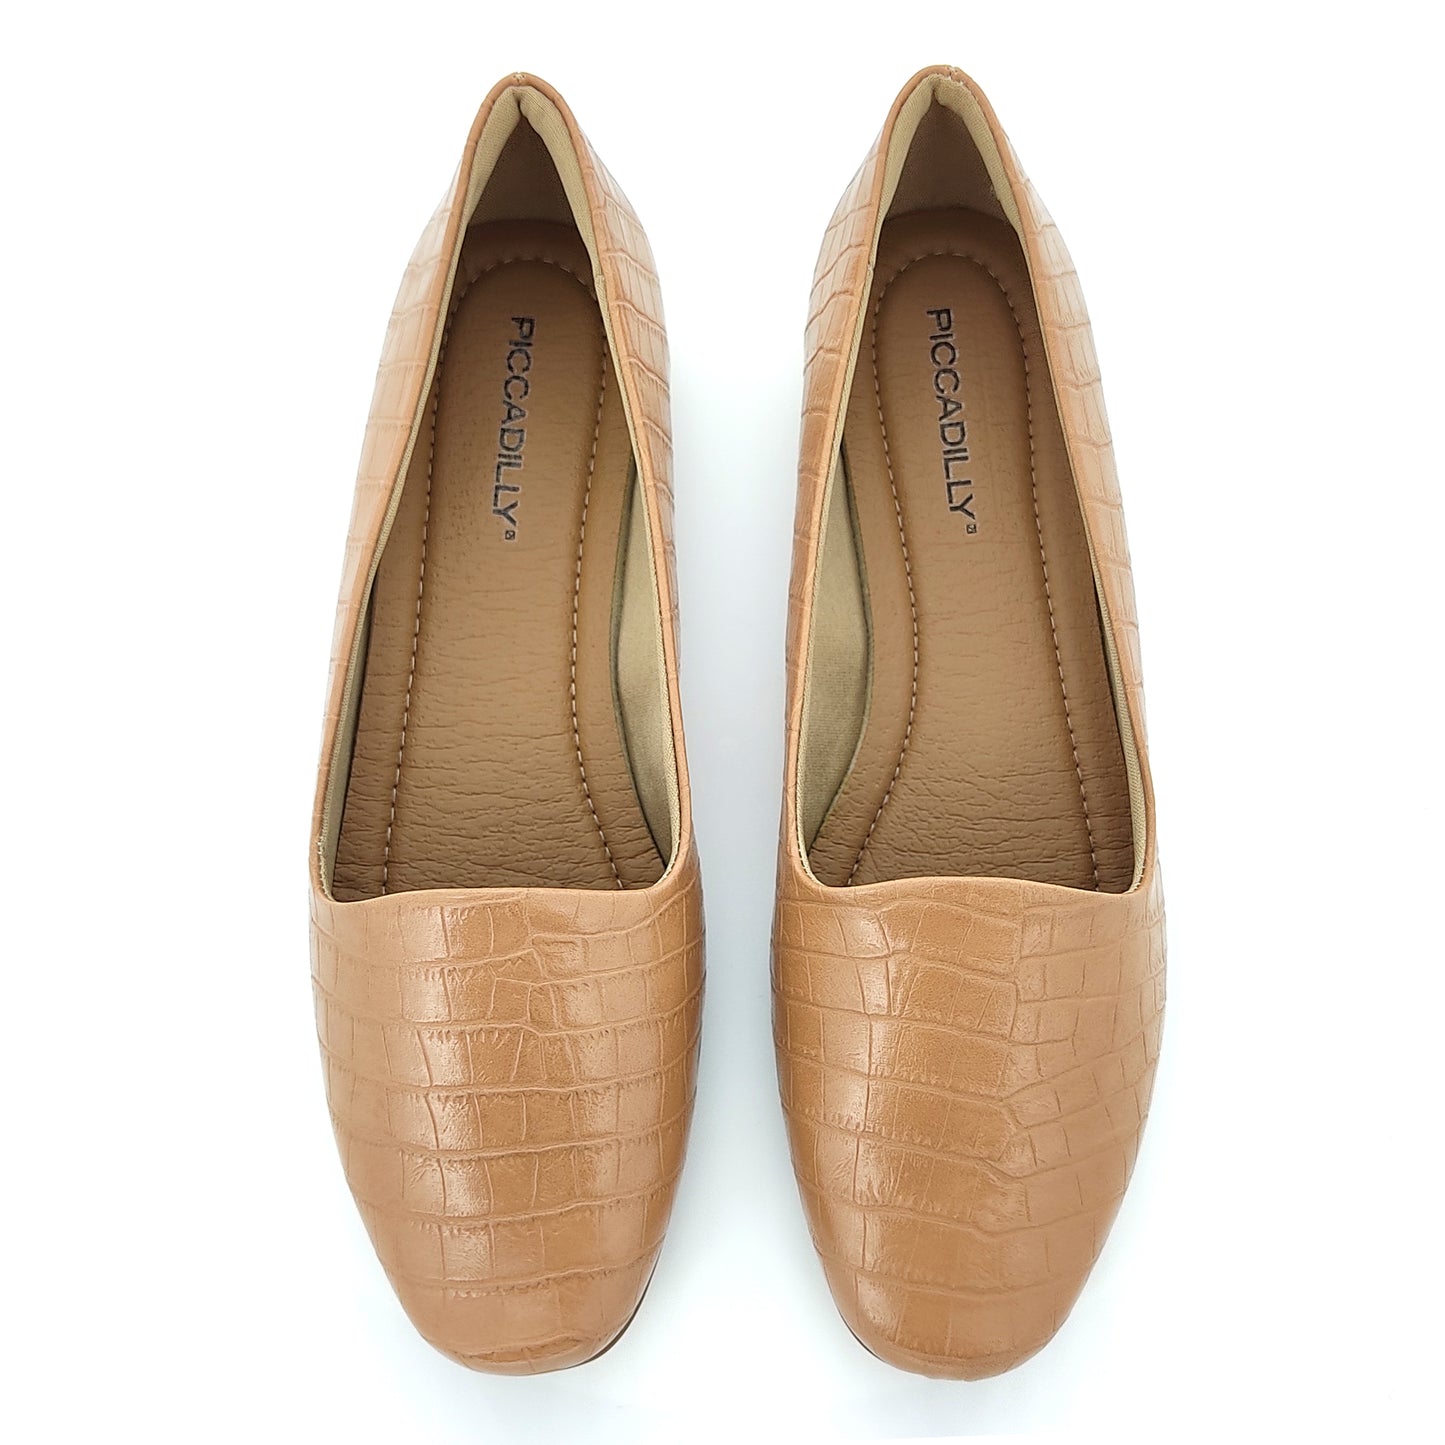 Nude Croco Flat Ladies Shoes (250.132)